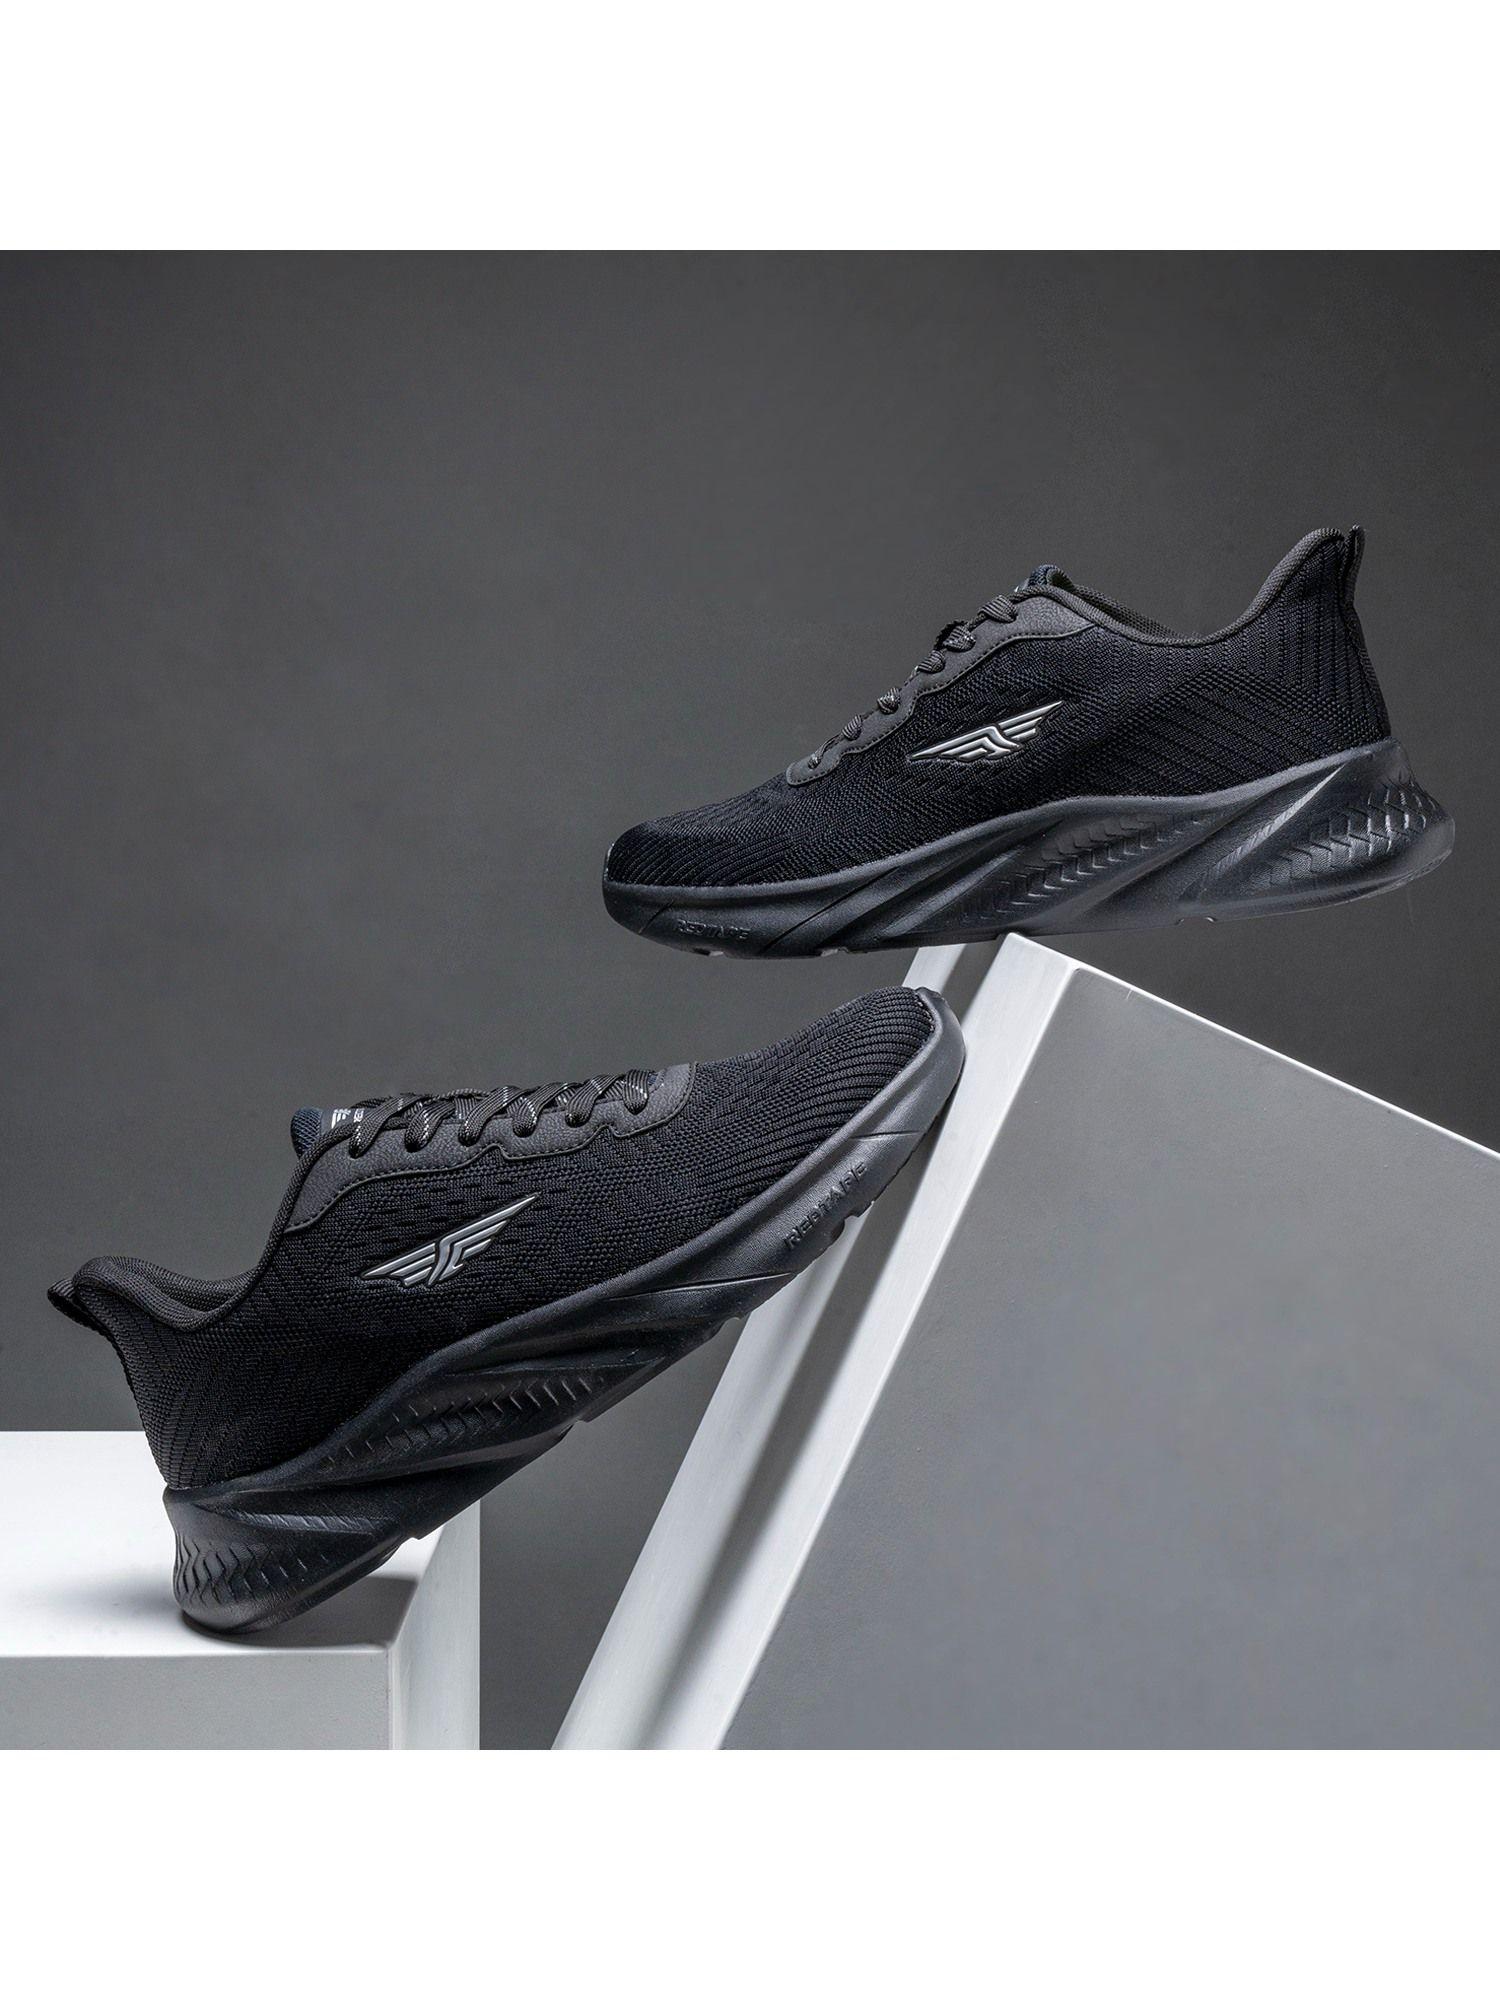 men solid black running shoes